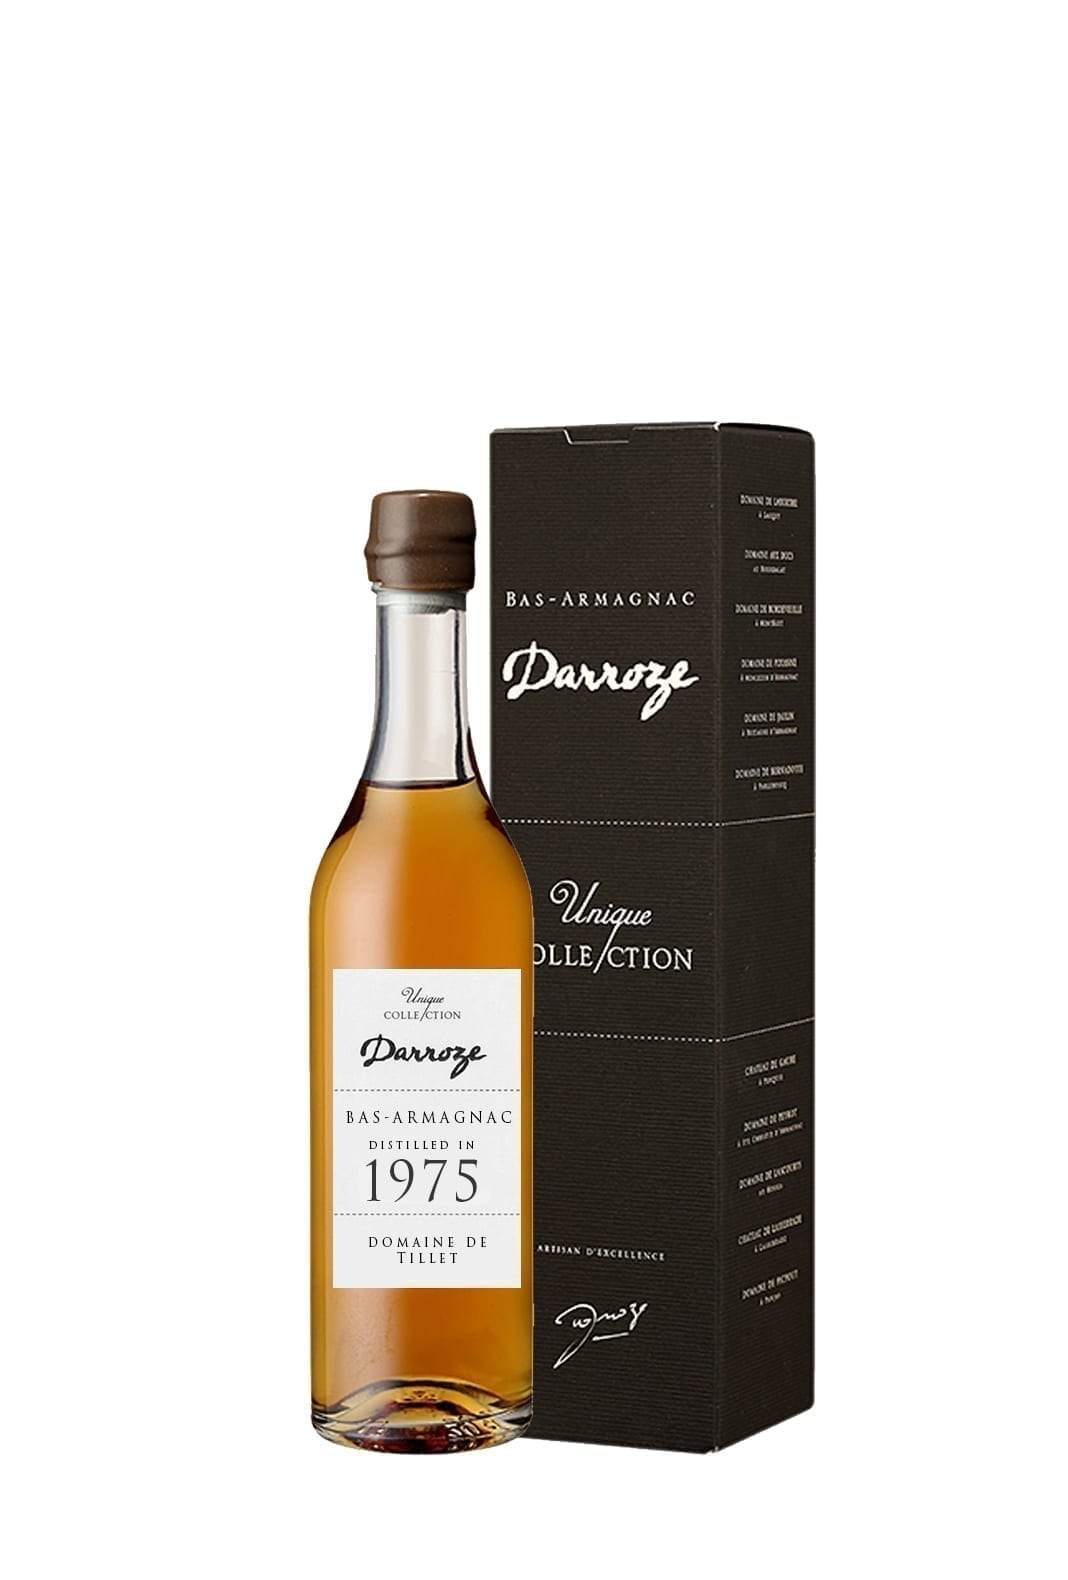 Darroze 1975 Tillet Grand Bas Armagnac 40.7% 200ml | Brandy | Shop online at Spirits of France